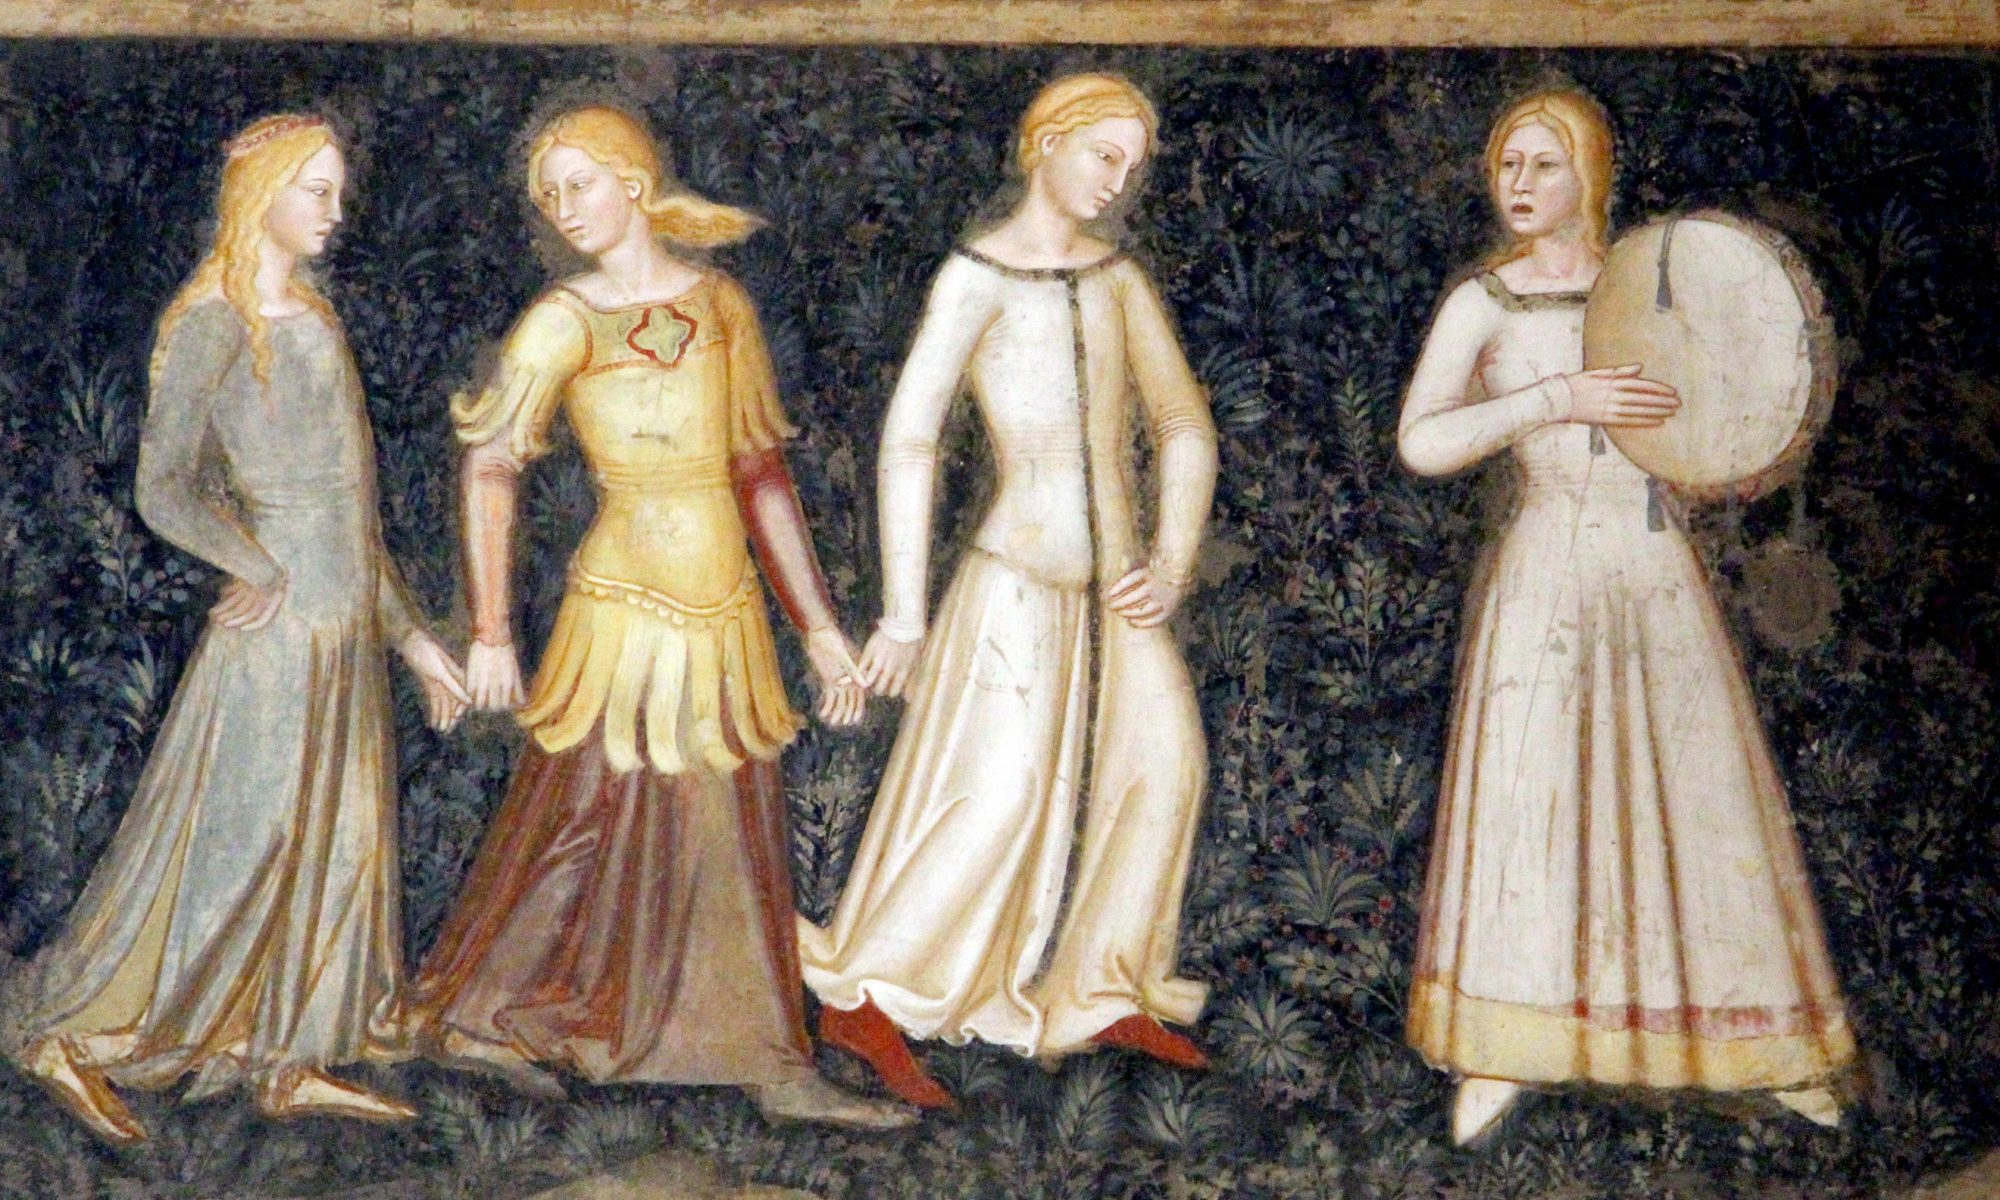 Srednjovjekovne dvorske dame sljedile su poziv – Detalj s freske di Bonaiuta